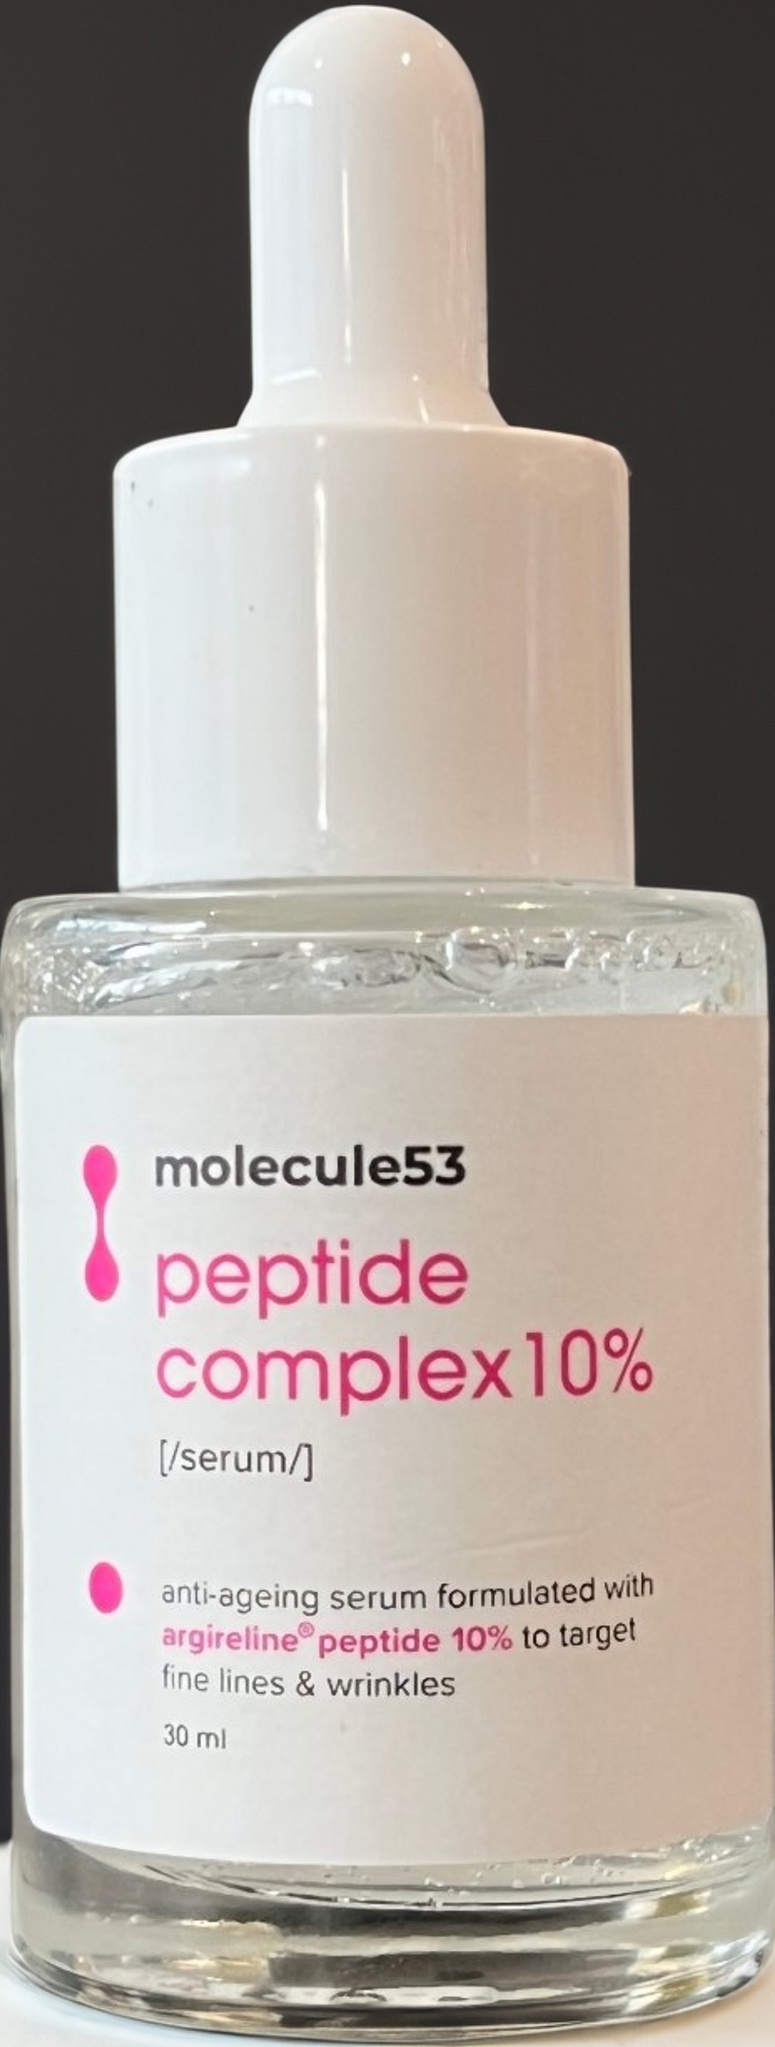 Molecule53 Argireline® Peptide Complex 10% - Anti-ageing Serum